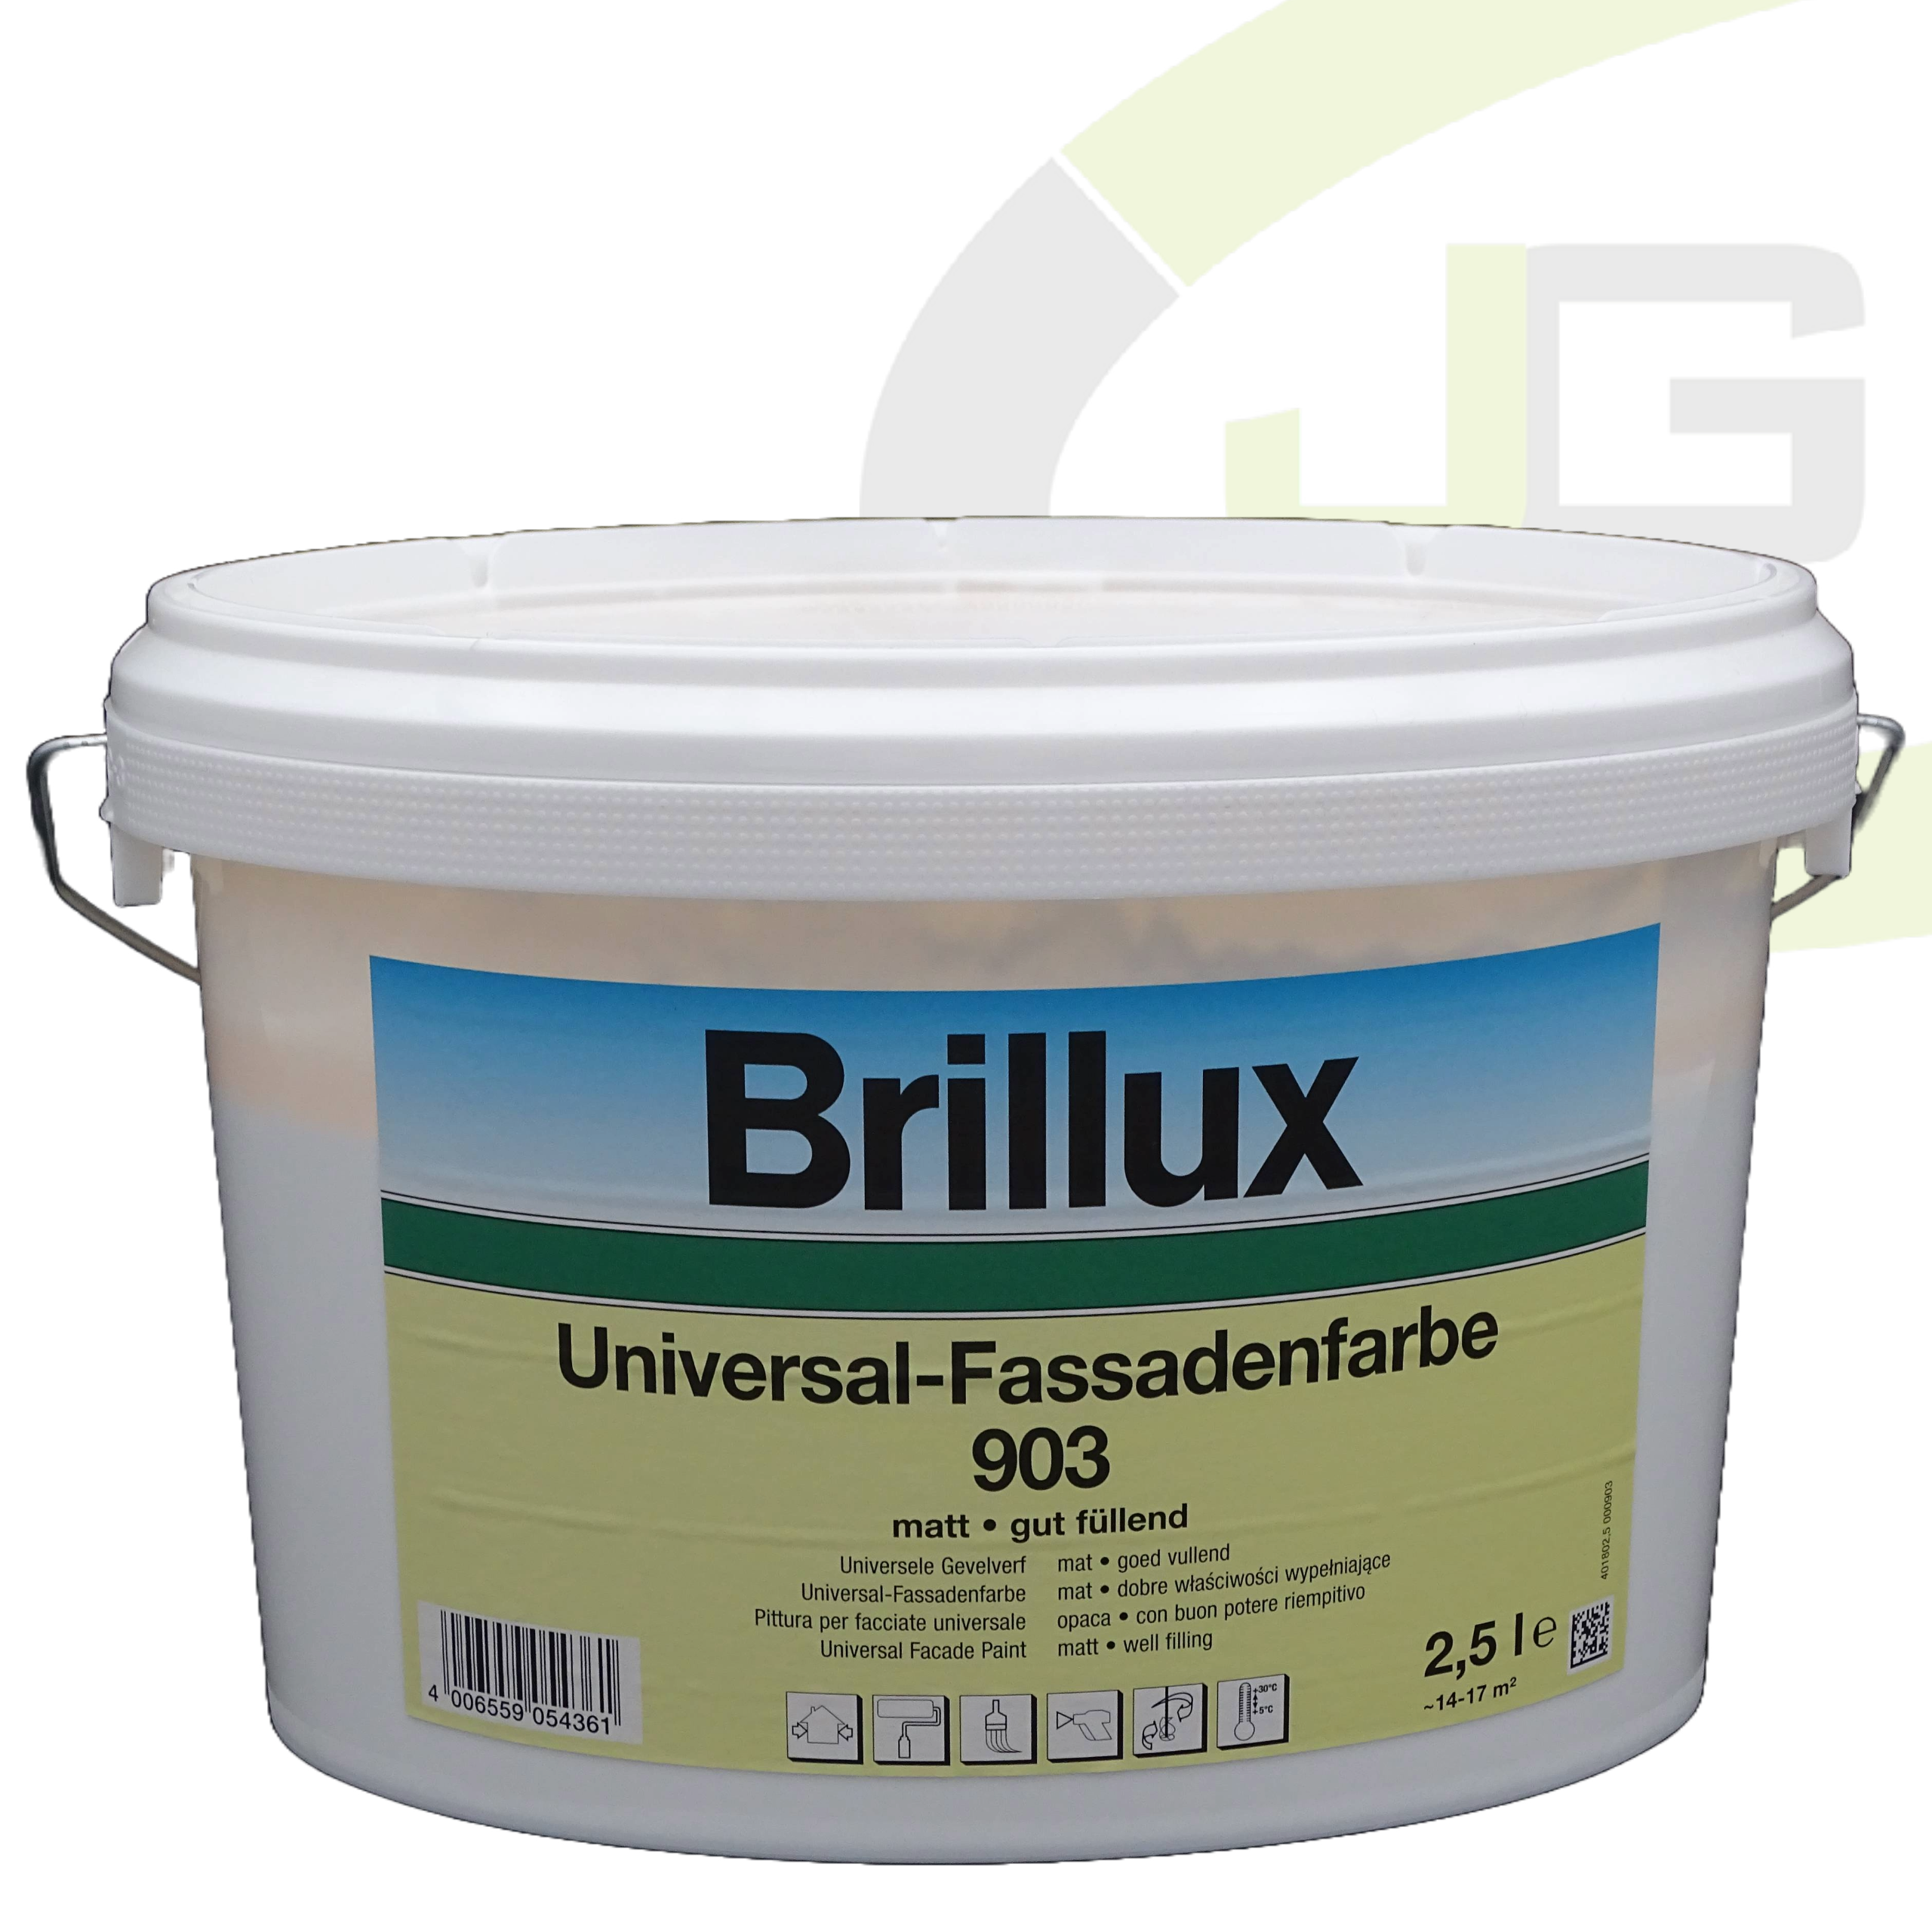 Brillux Universal-Fassadenfarbe 903 weiß - 2.50 LTR / Fassadenfarbe